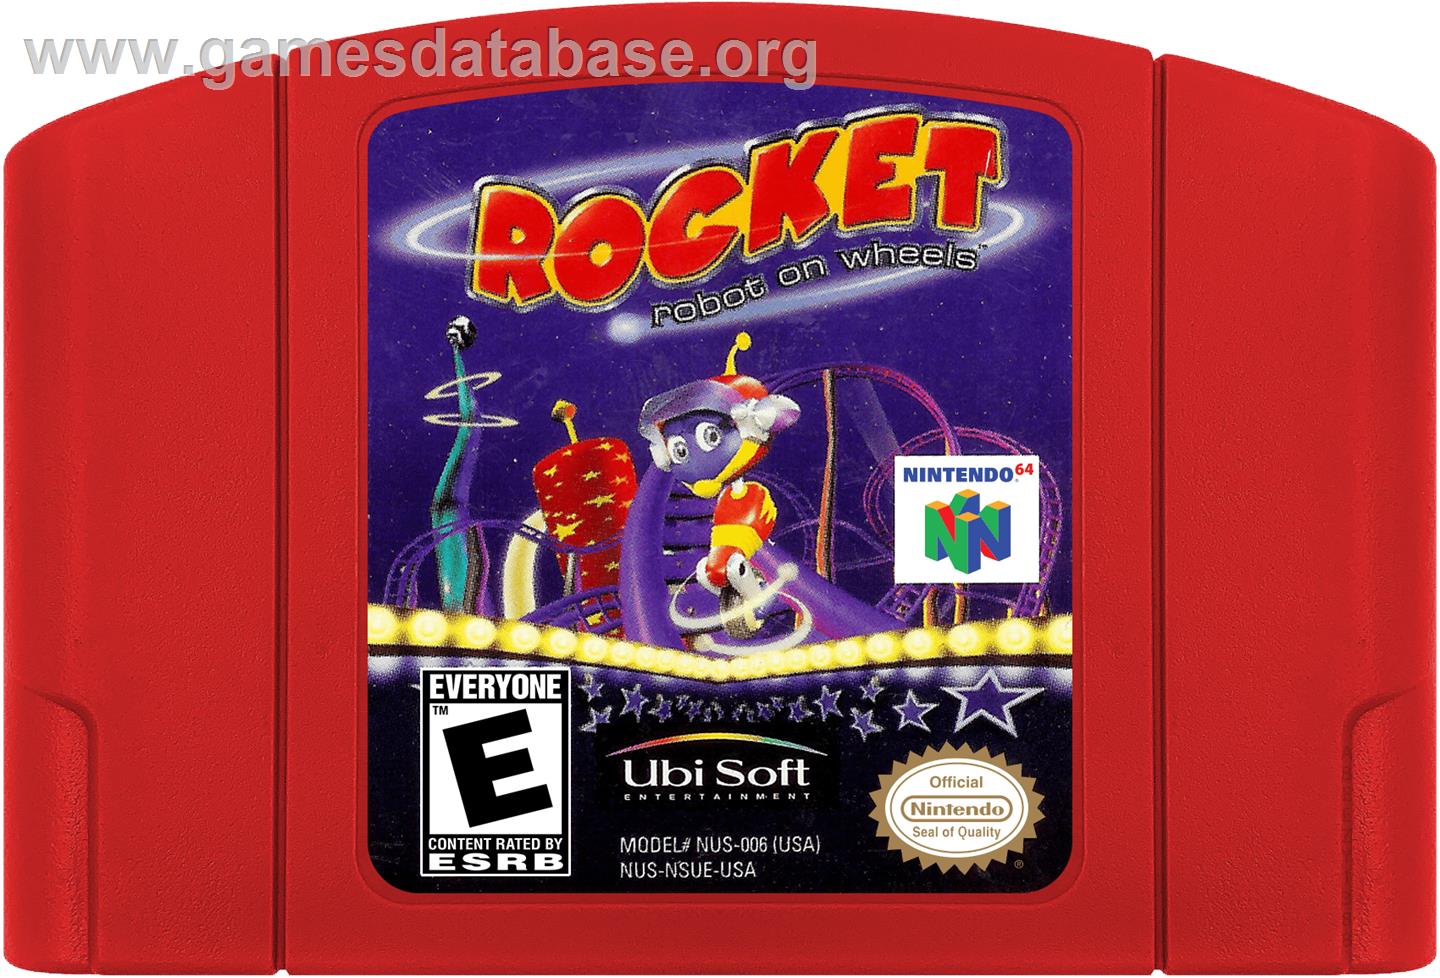 Rocket: Robot on Wheels - Nintendo N64 - Artwork - Cartridge